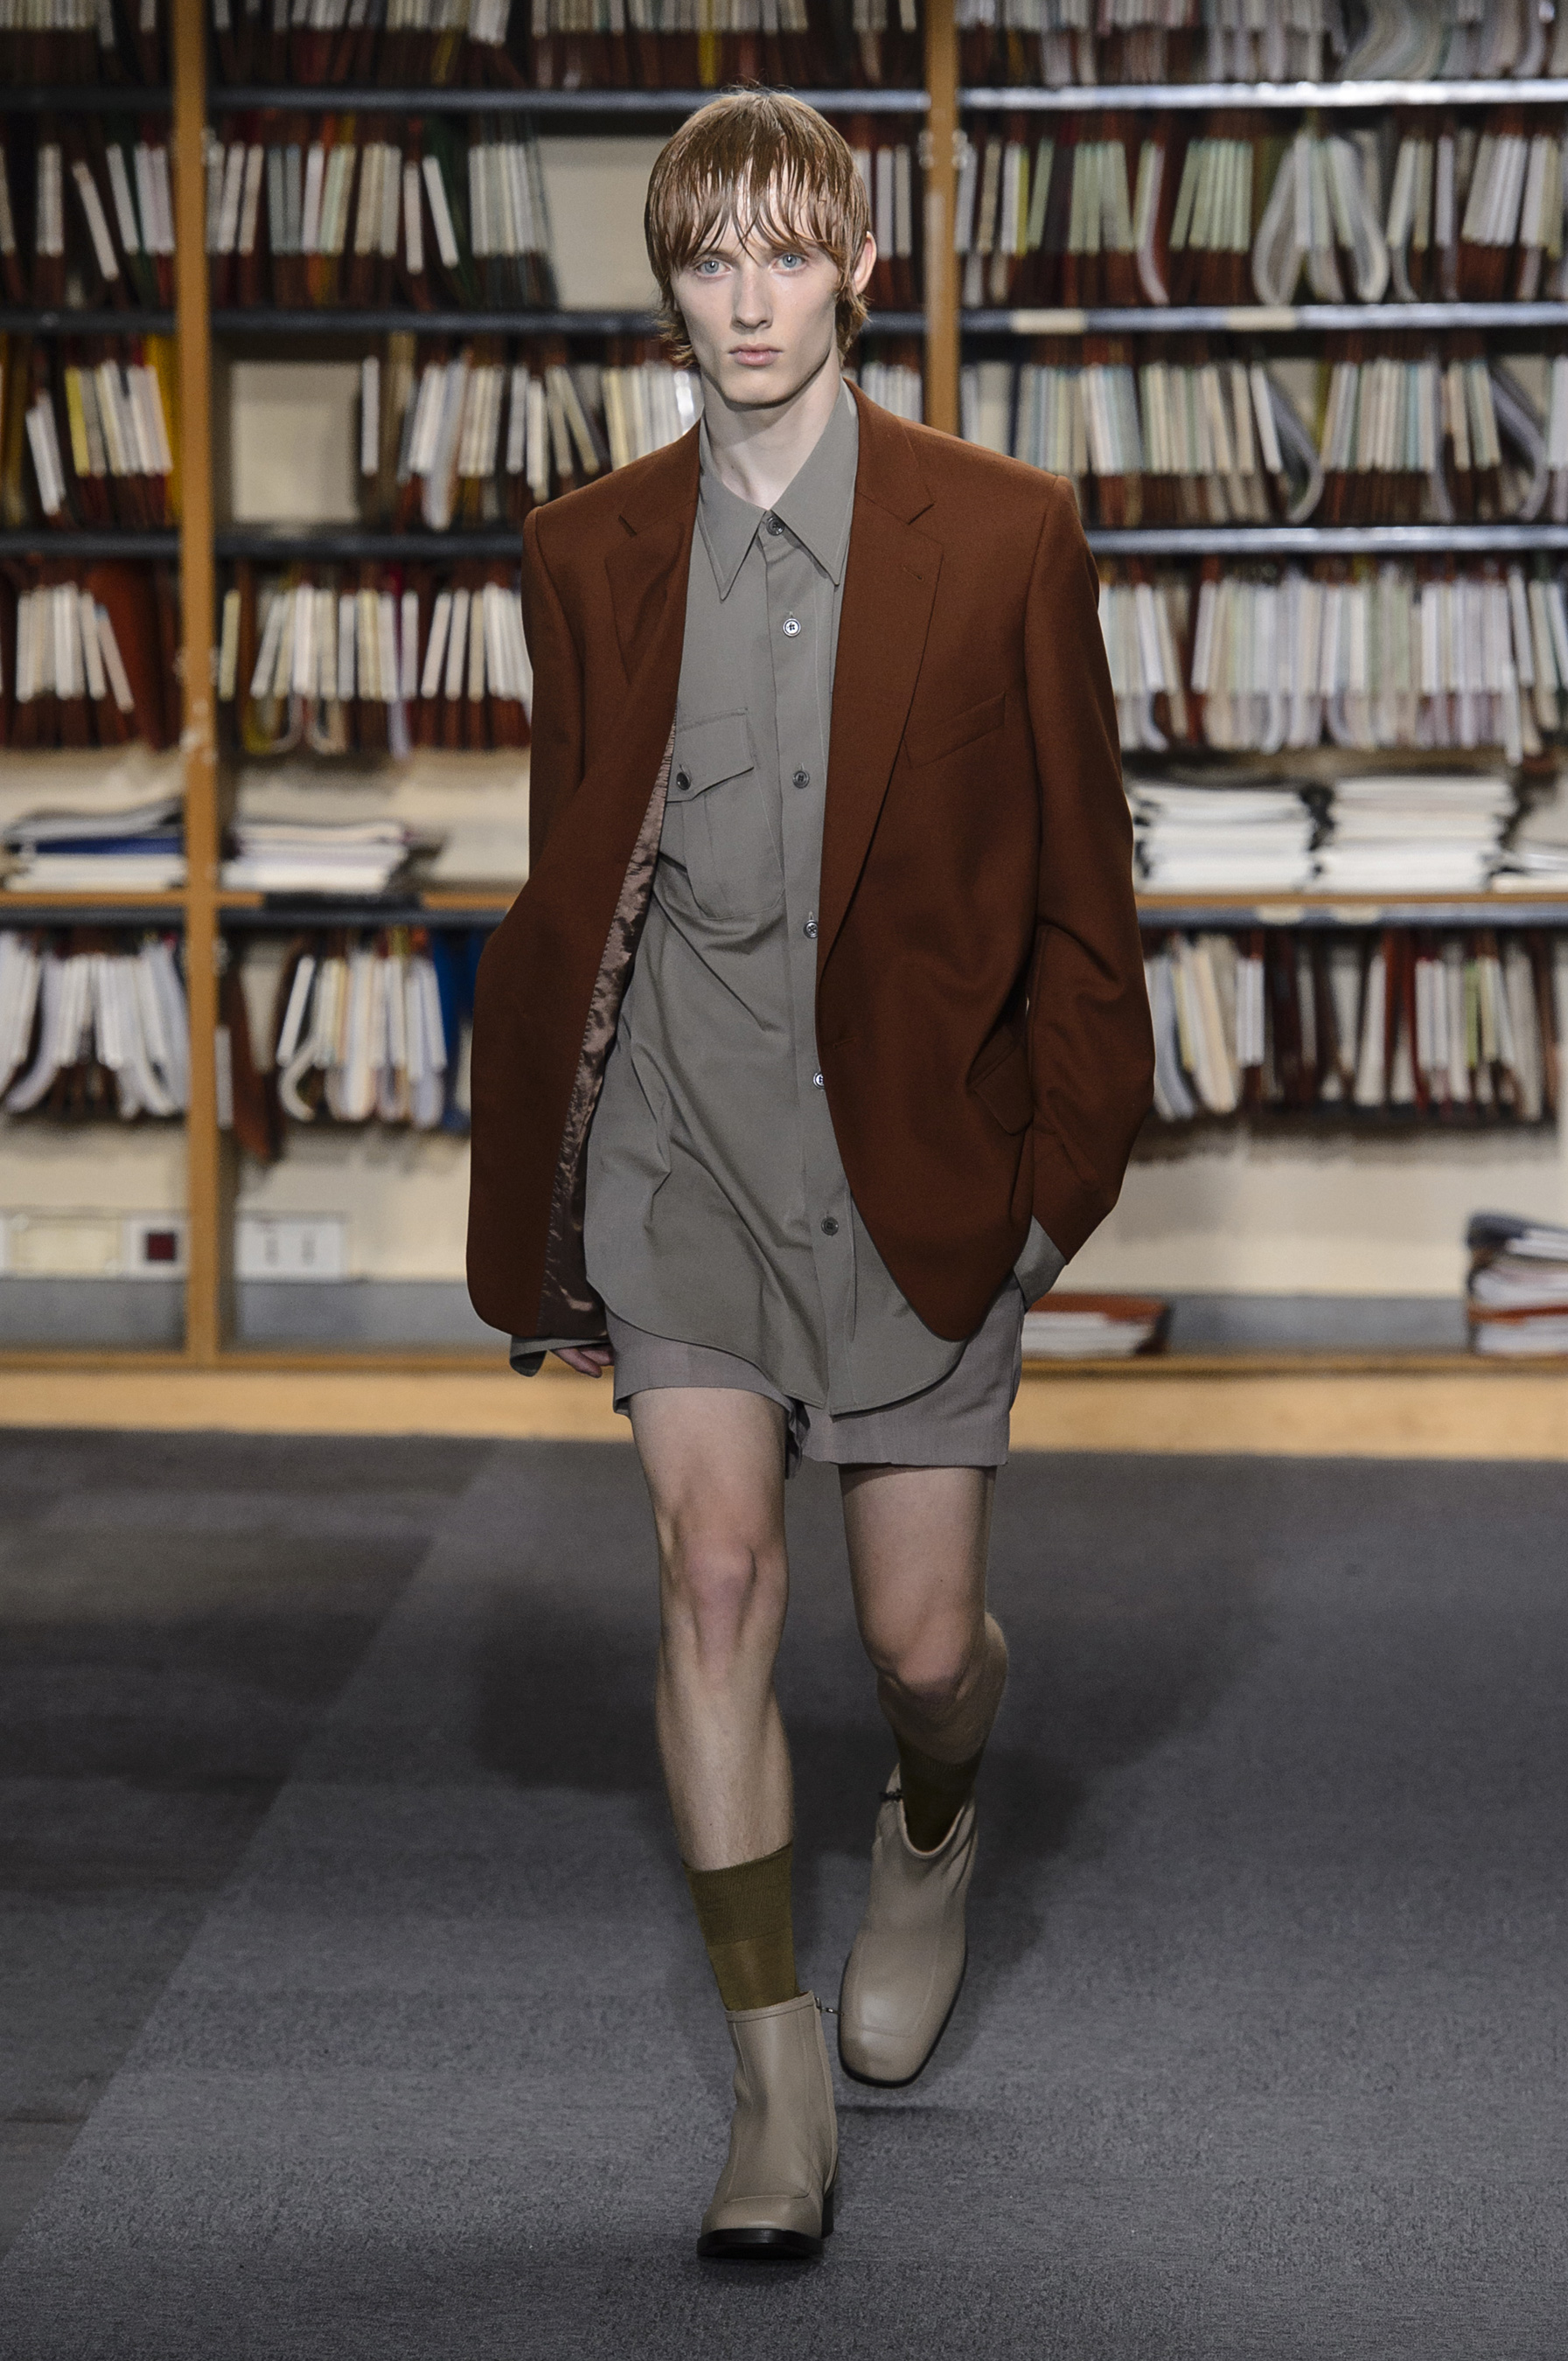 Dries Van Noten Spring 2018 Men's Fashion Show - The Impression